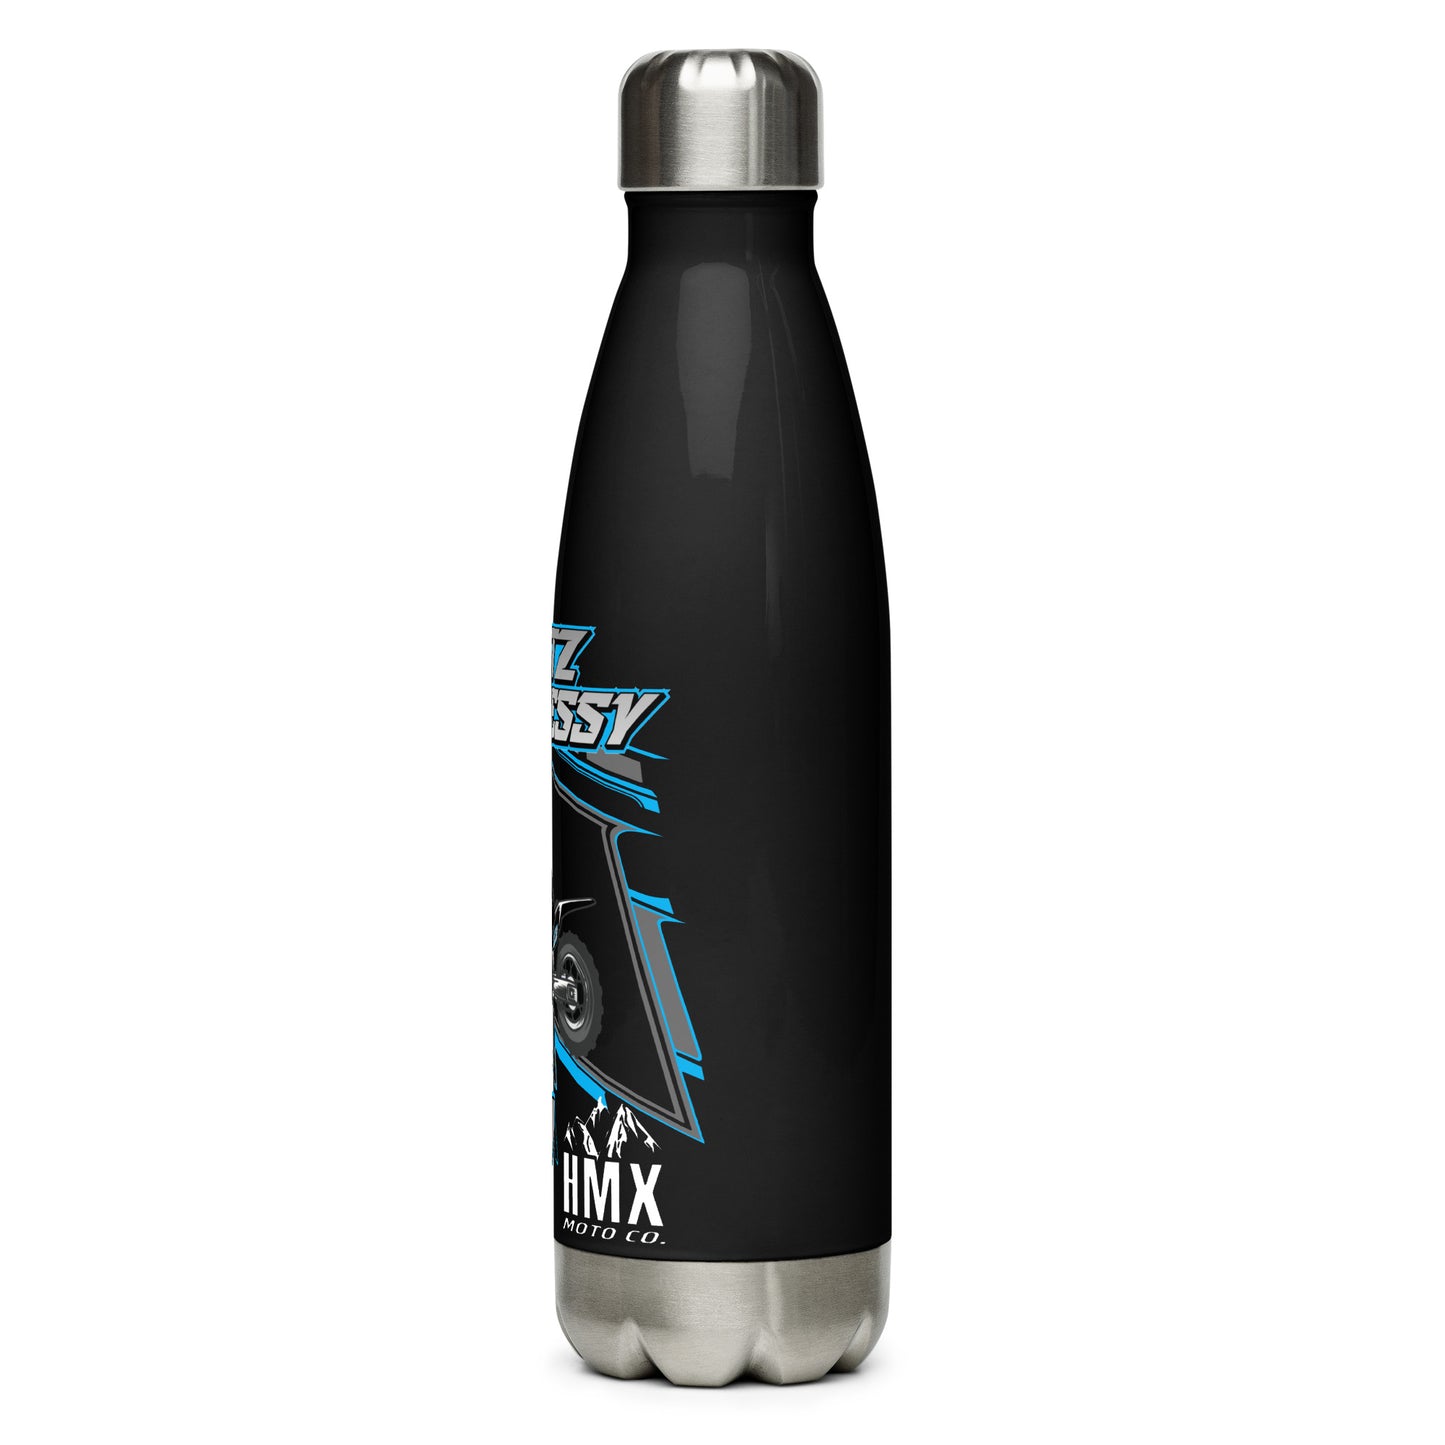 Metz Hennessy Stainless Steel Water Bottle